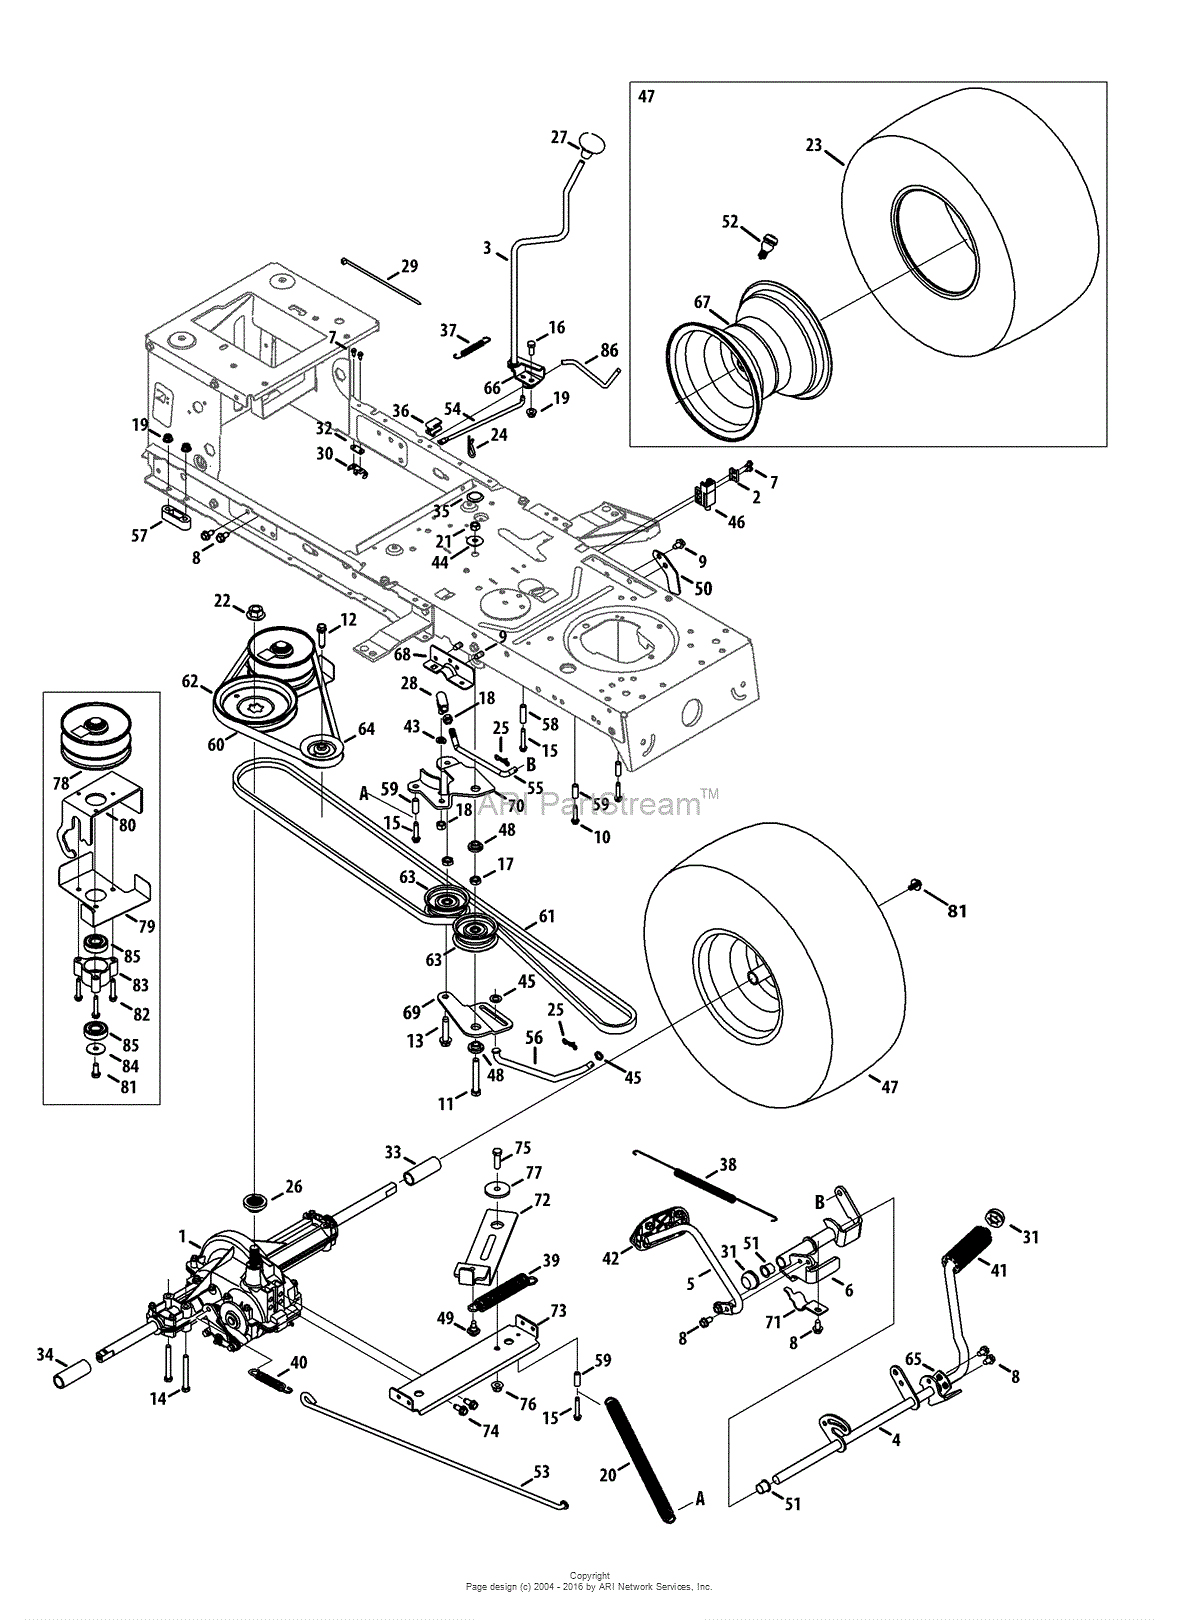 35 Craftsman Lt2000 Parts Diagram Wiring Diagram List